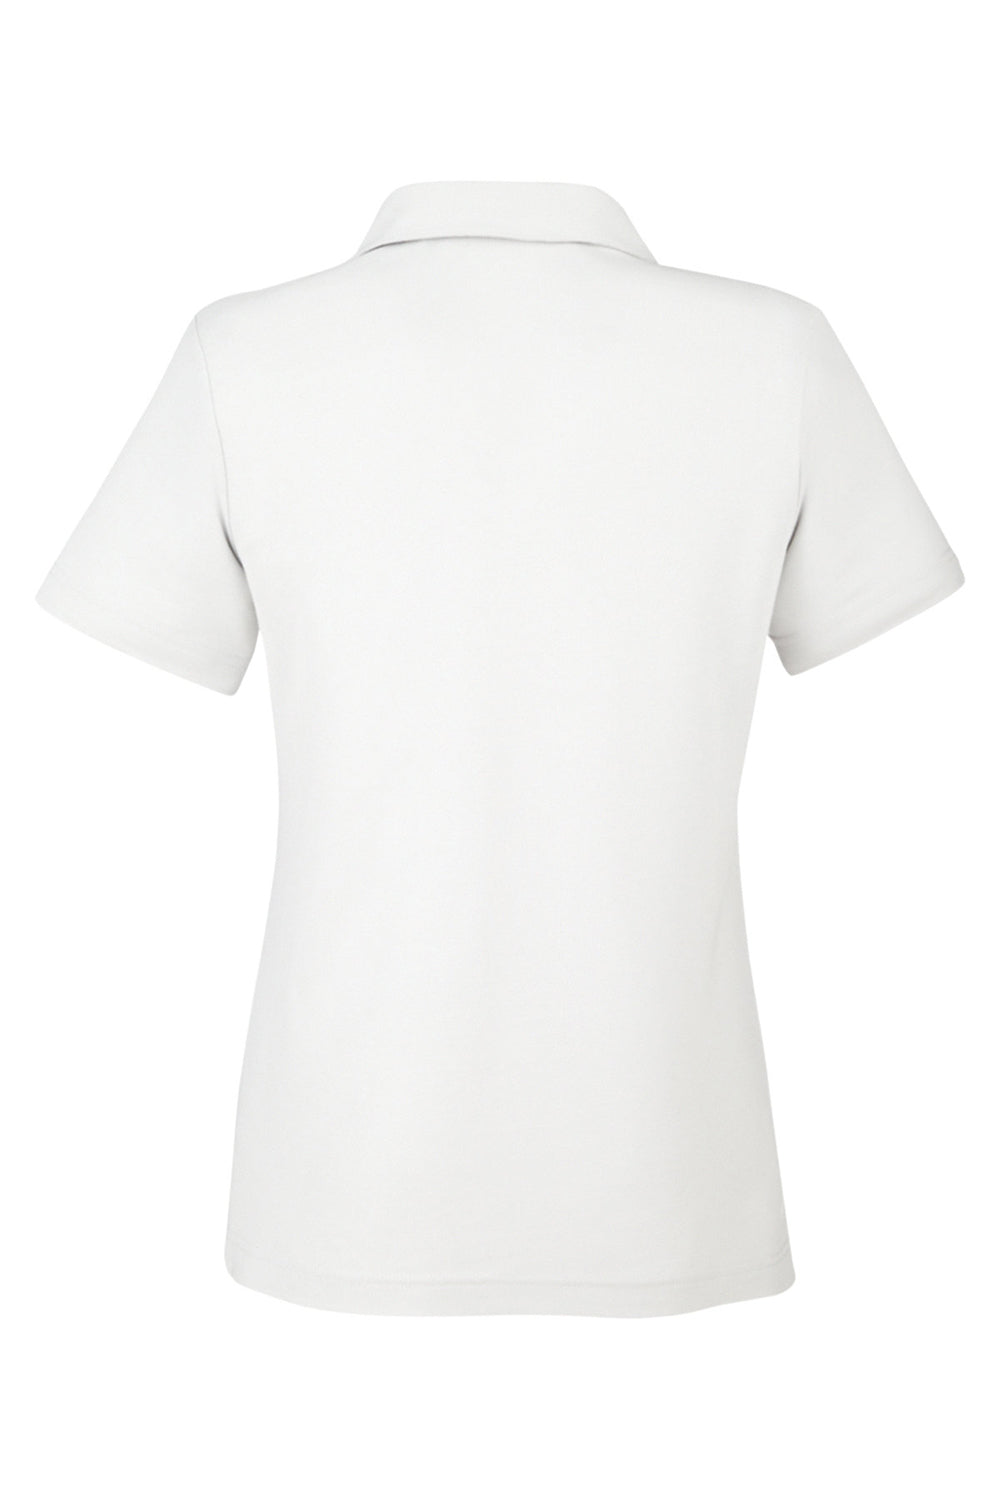 Core 365 CE112W Womens Fusion ChromaSoft Performance Moisture Wicking Pique Short Sleeve Polo Shirt White Flat Back